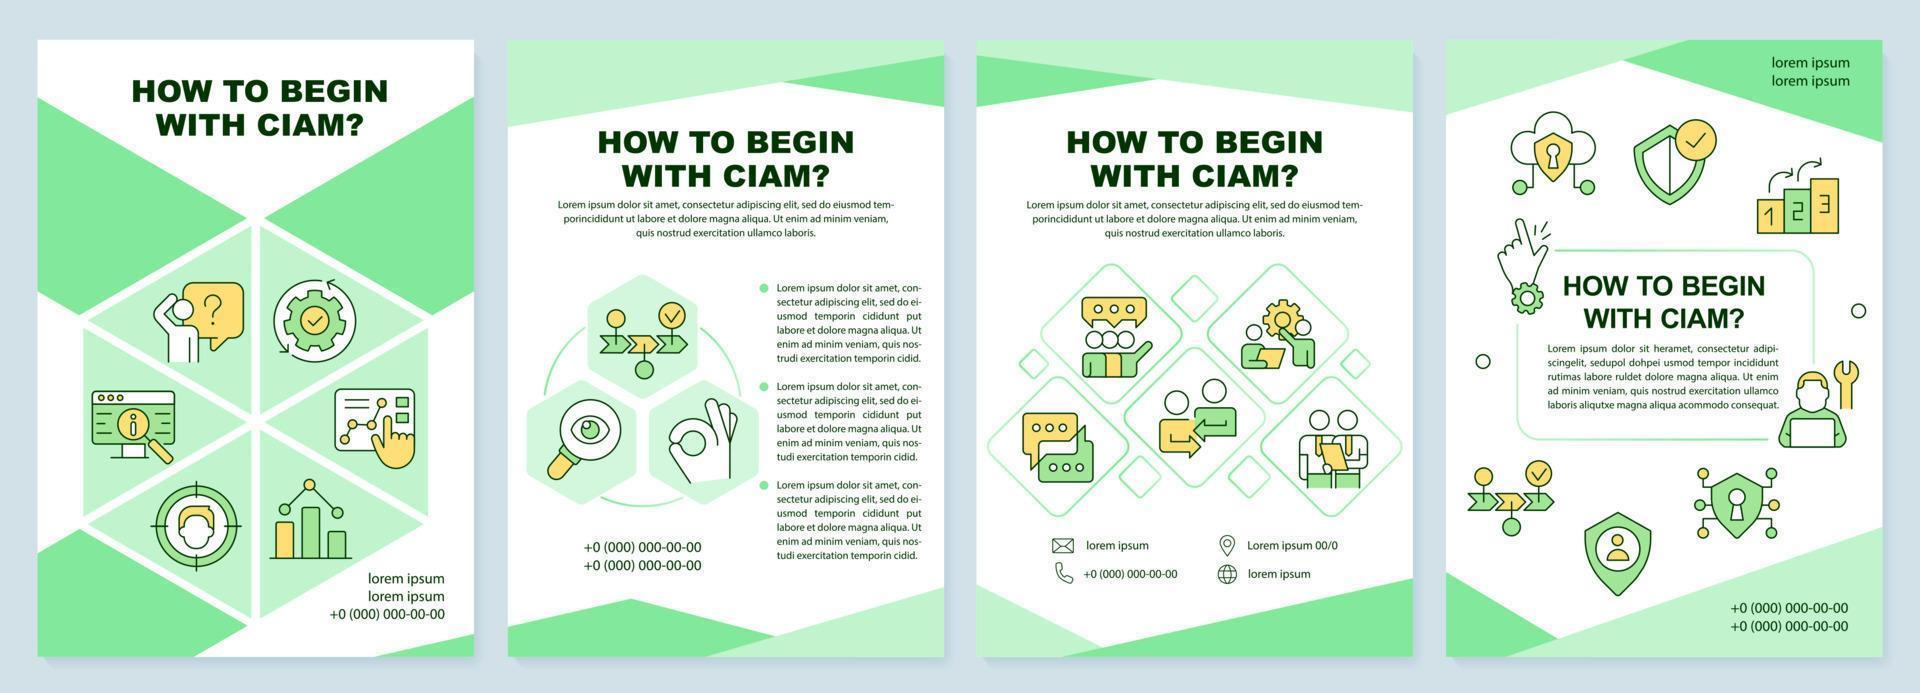 comenzando con ciam verde folleto modelo. negocio mejora. folleto diseño con lineal iconos editable 4 4 vector diseños para presentación, anual informes